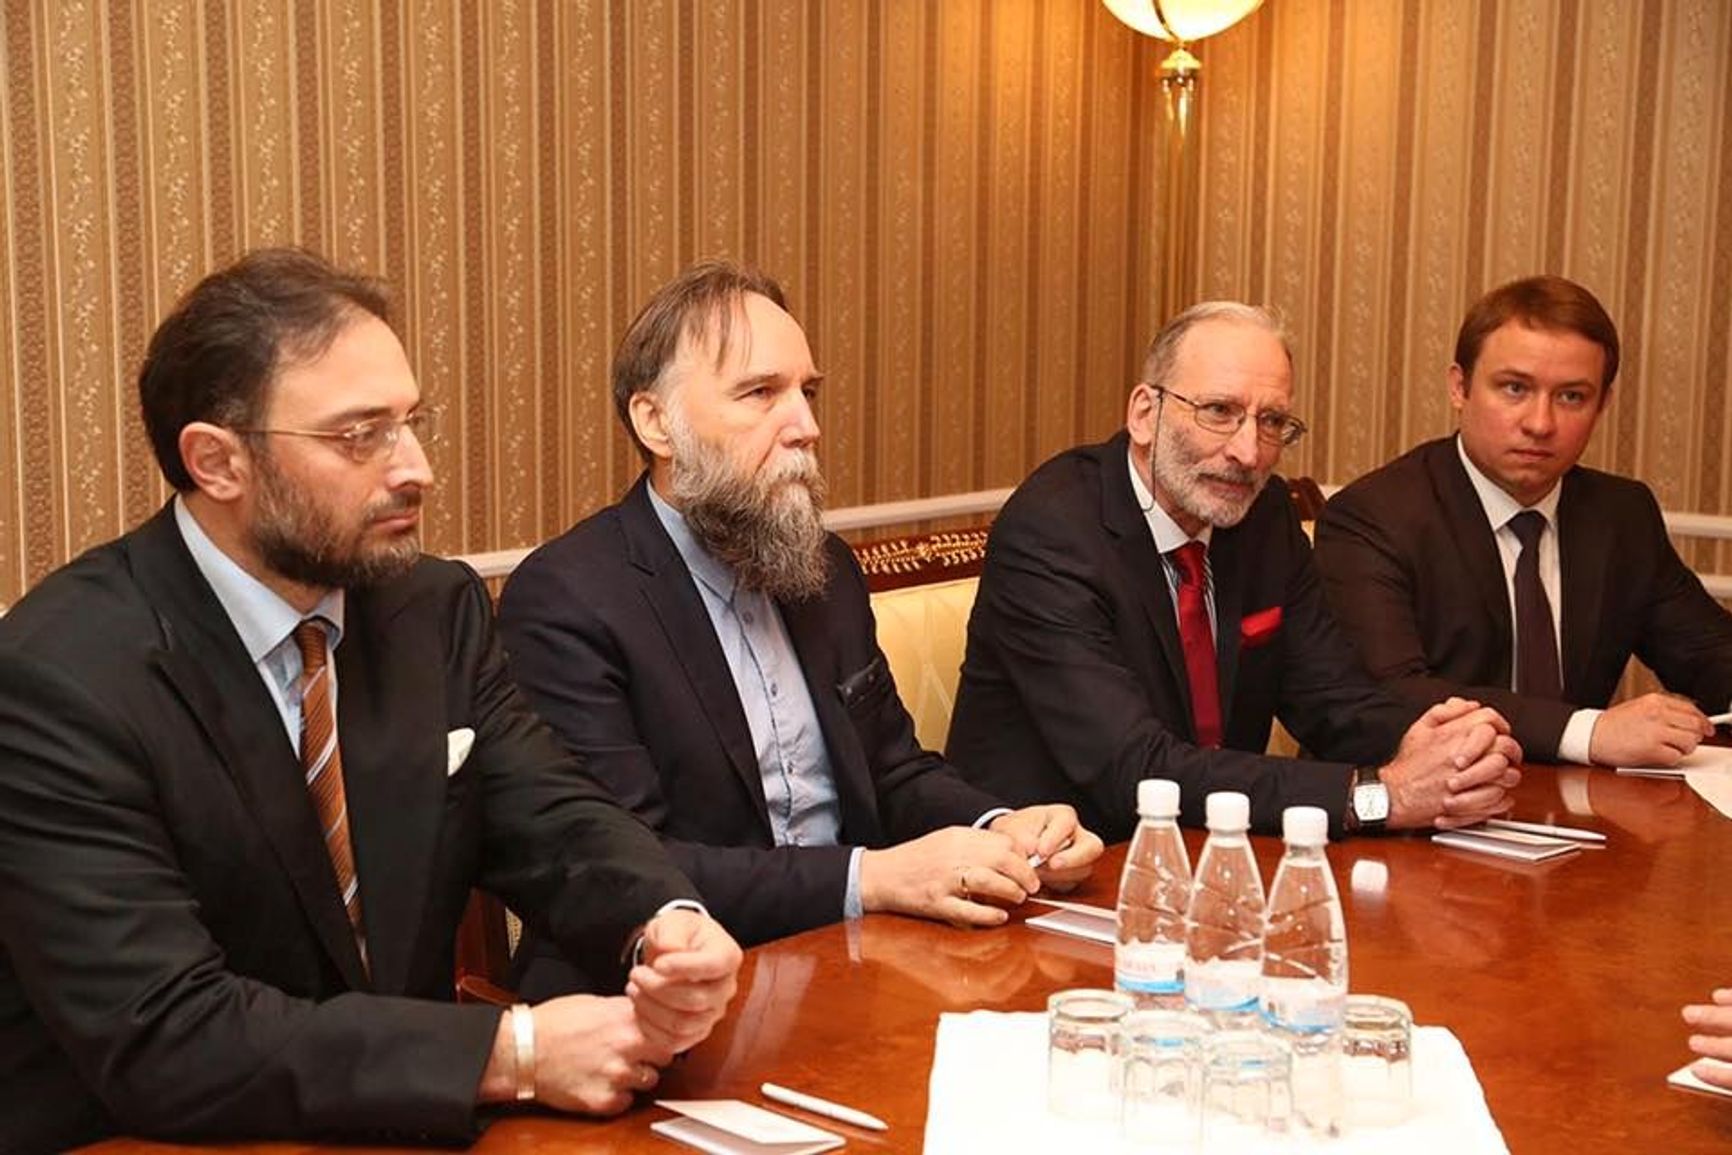 Kharchenko (right) accompanying Dugin on a trip